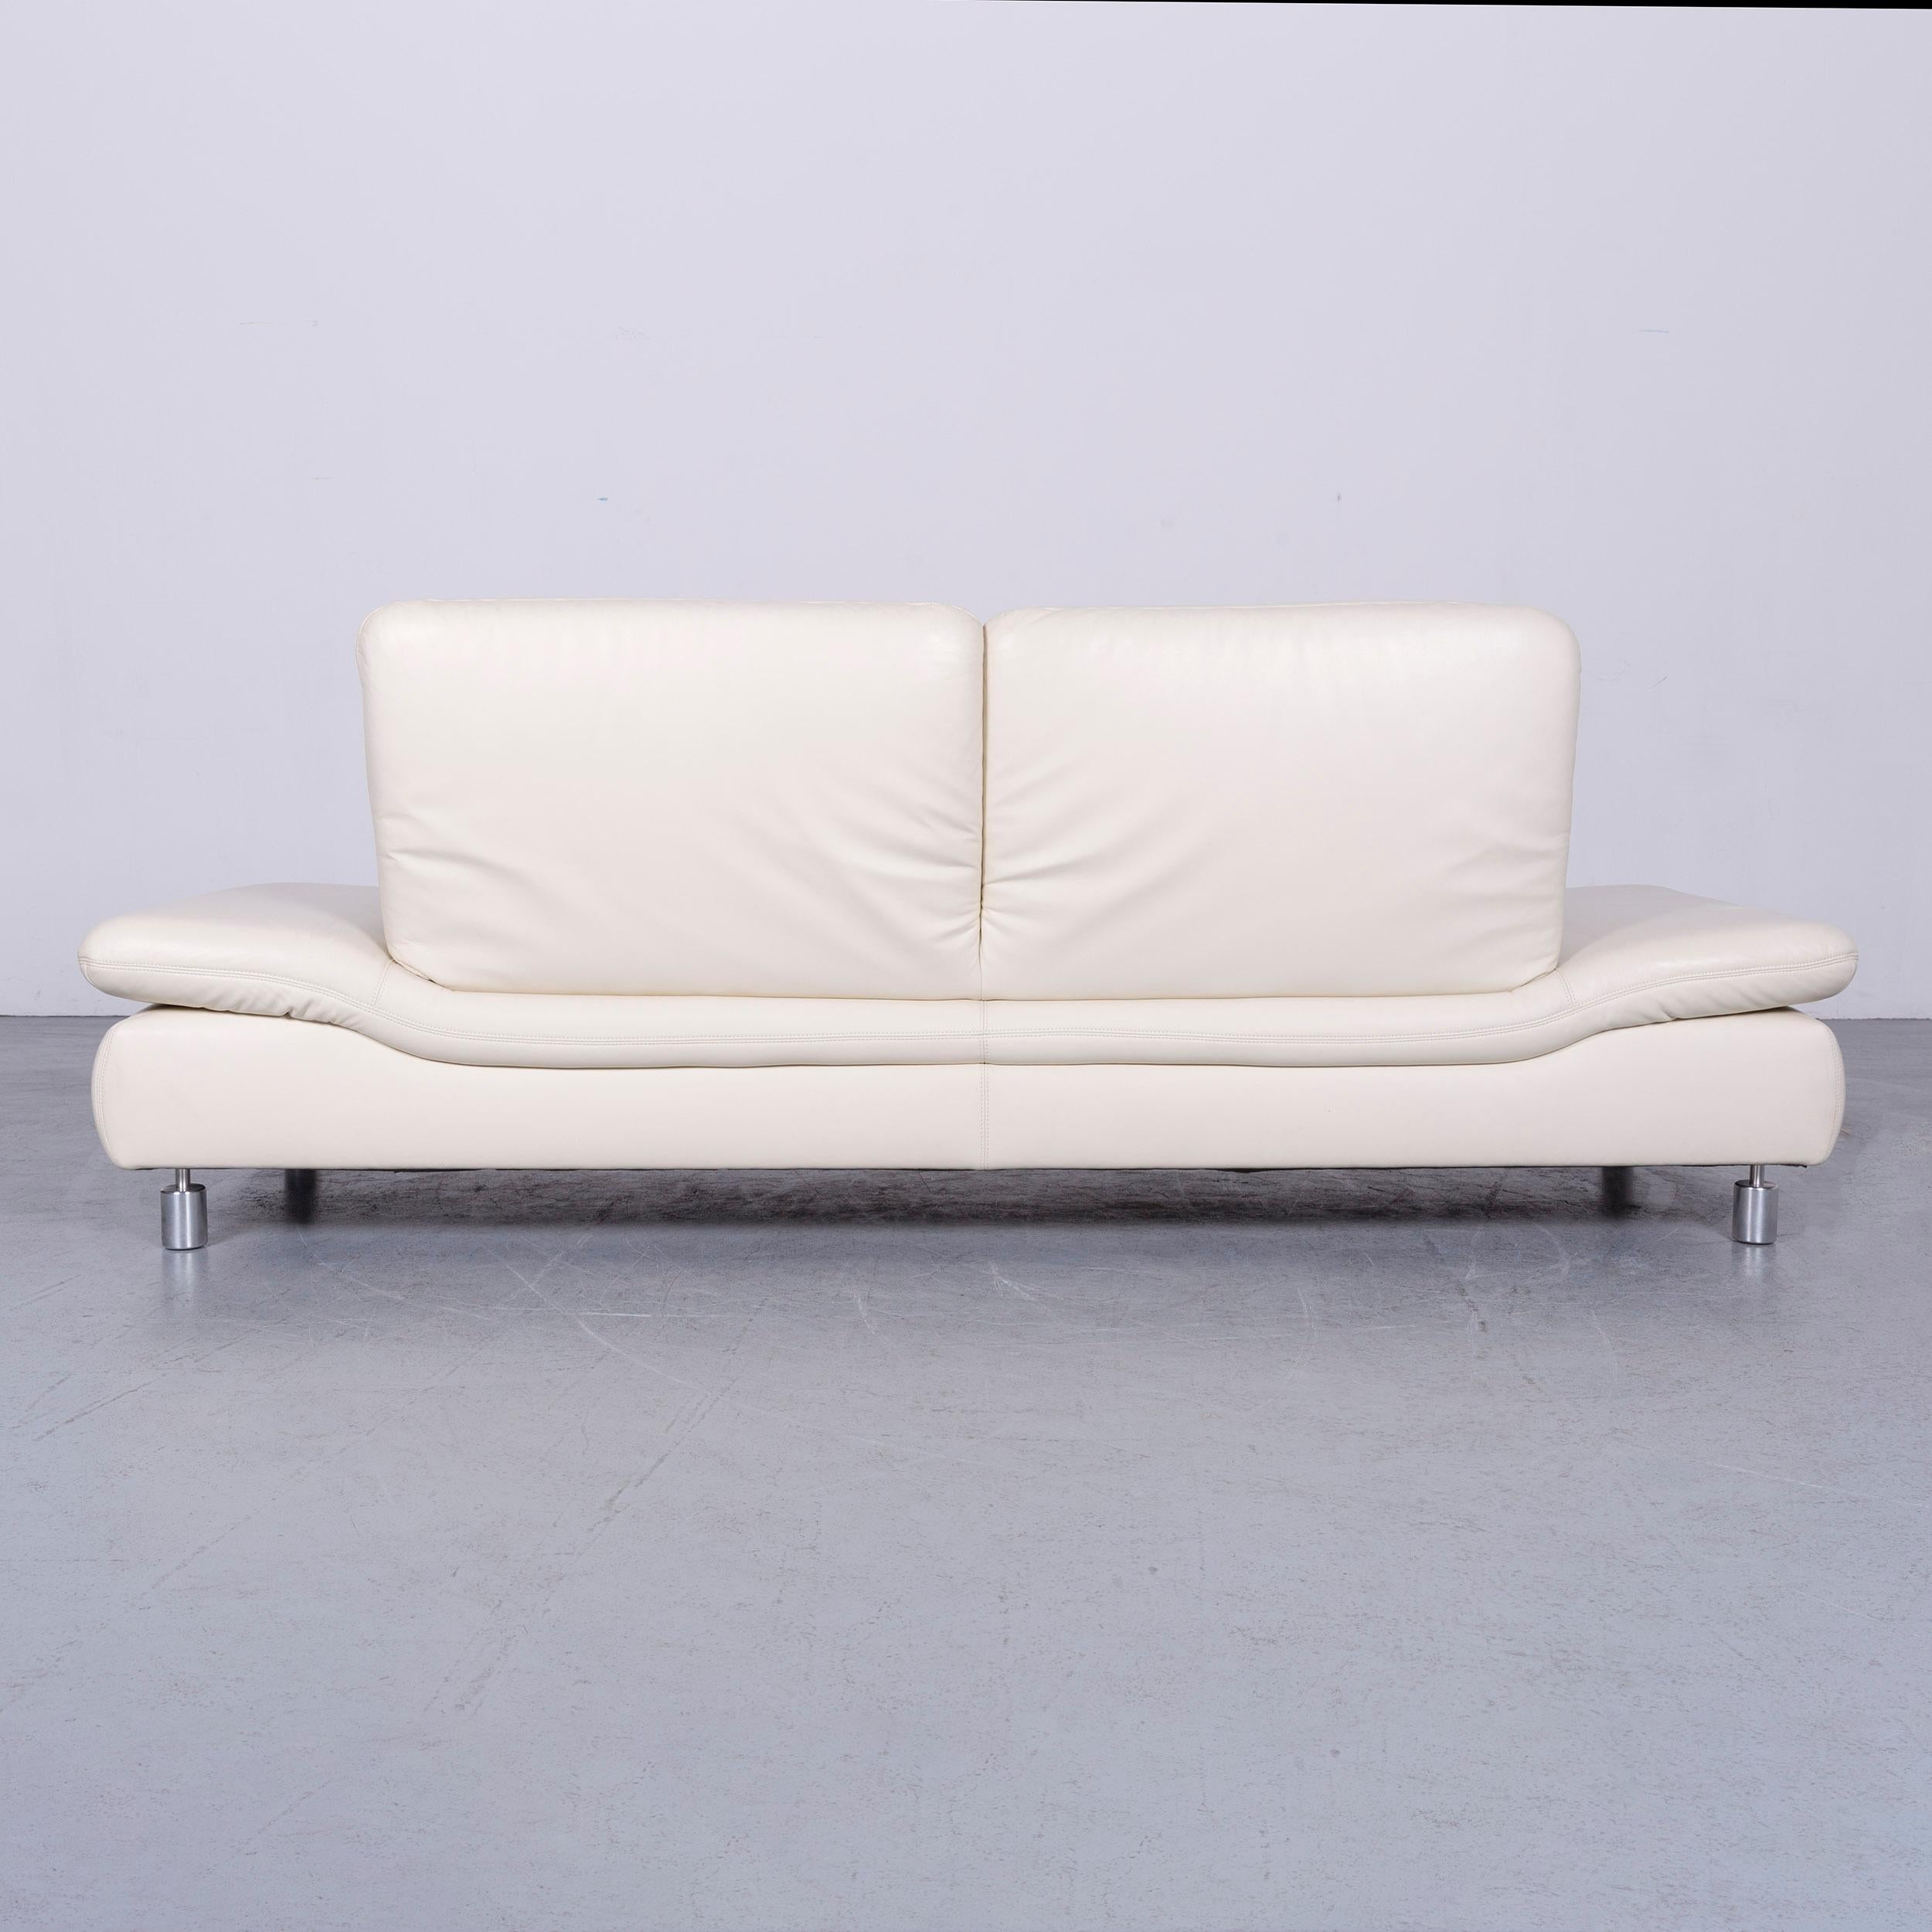 Koinor Rivoli Designer Leather Three-Seat Sofa in White with Functions 6